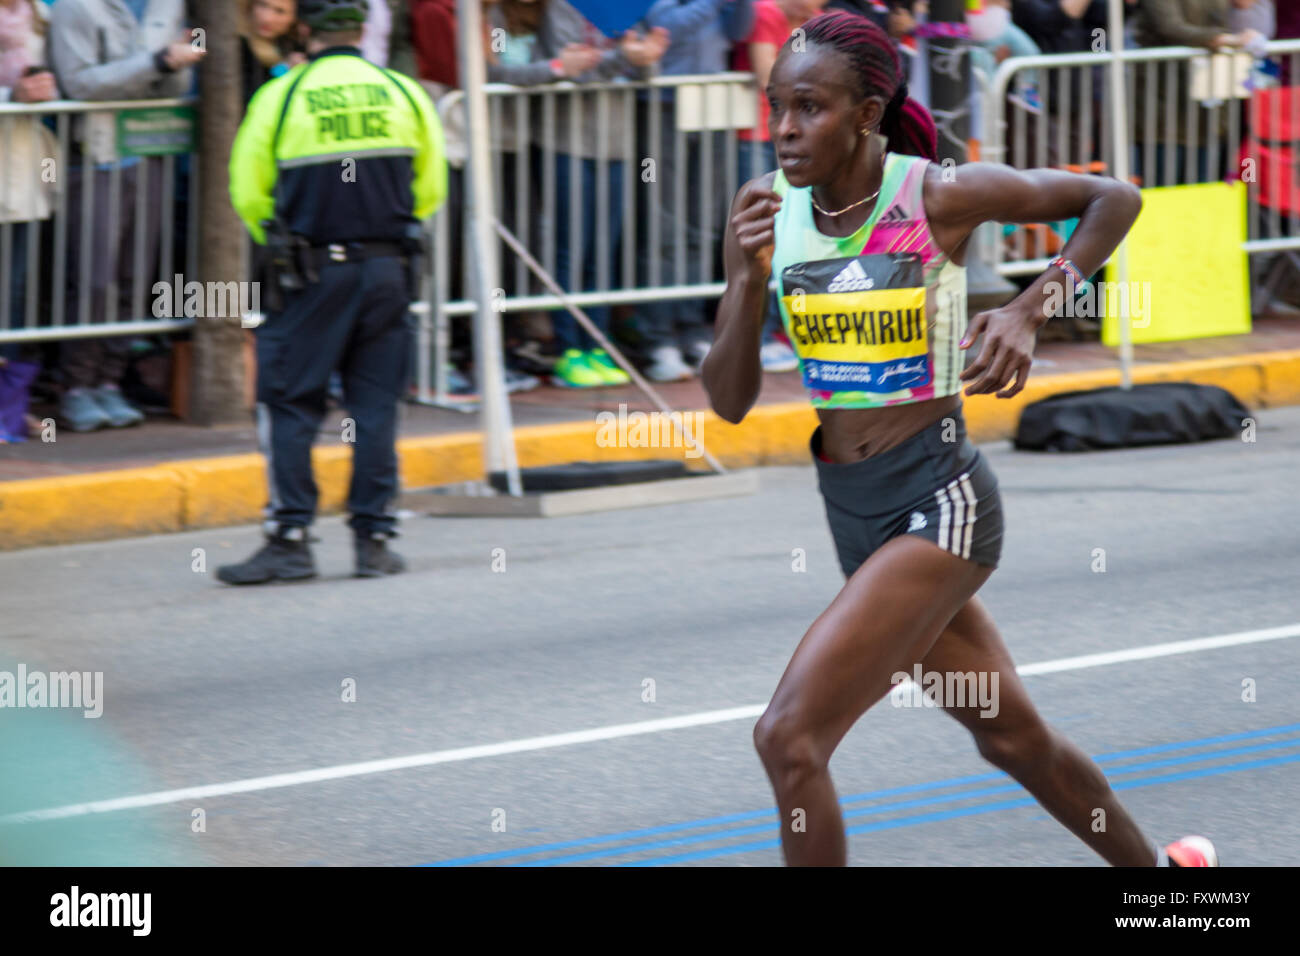 Boston, MA, USA. 18th April, 2016. Joyce Chepkirui of Kenya finishes 3rd in the Elite Women's field at the 2016 Boston Marathon. John Kavouris/Alamy Live News Stock Photo